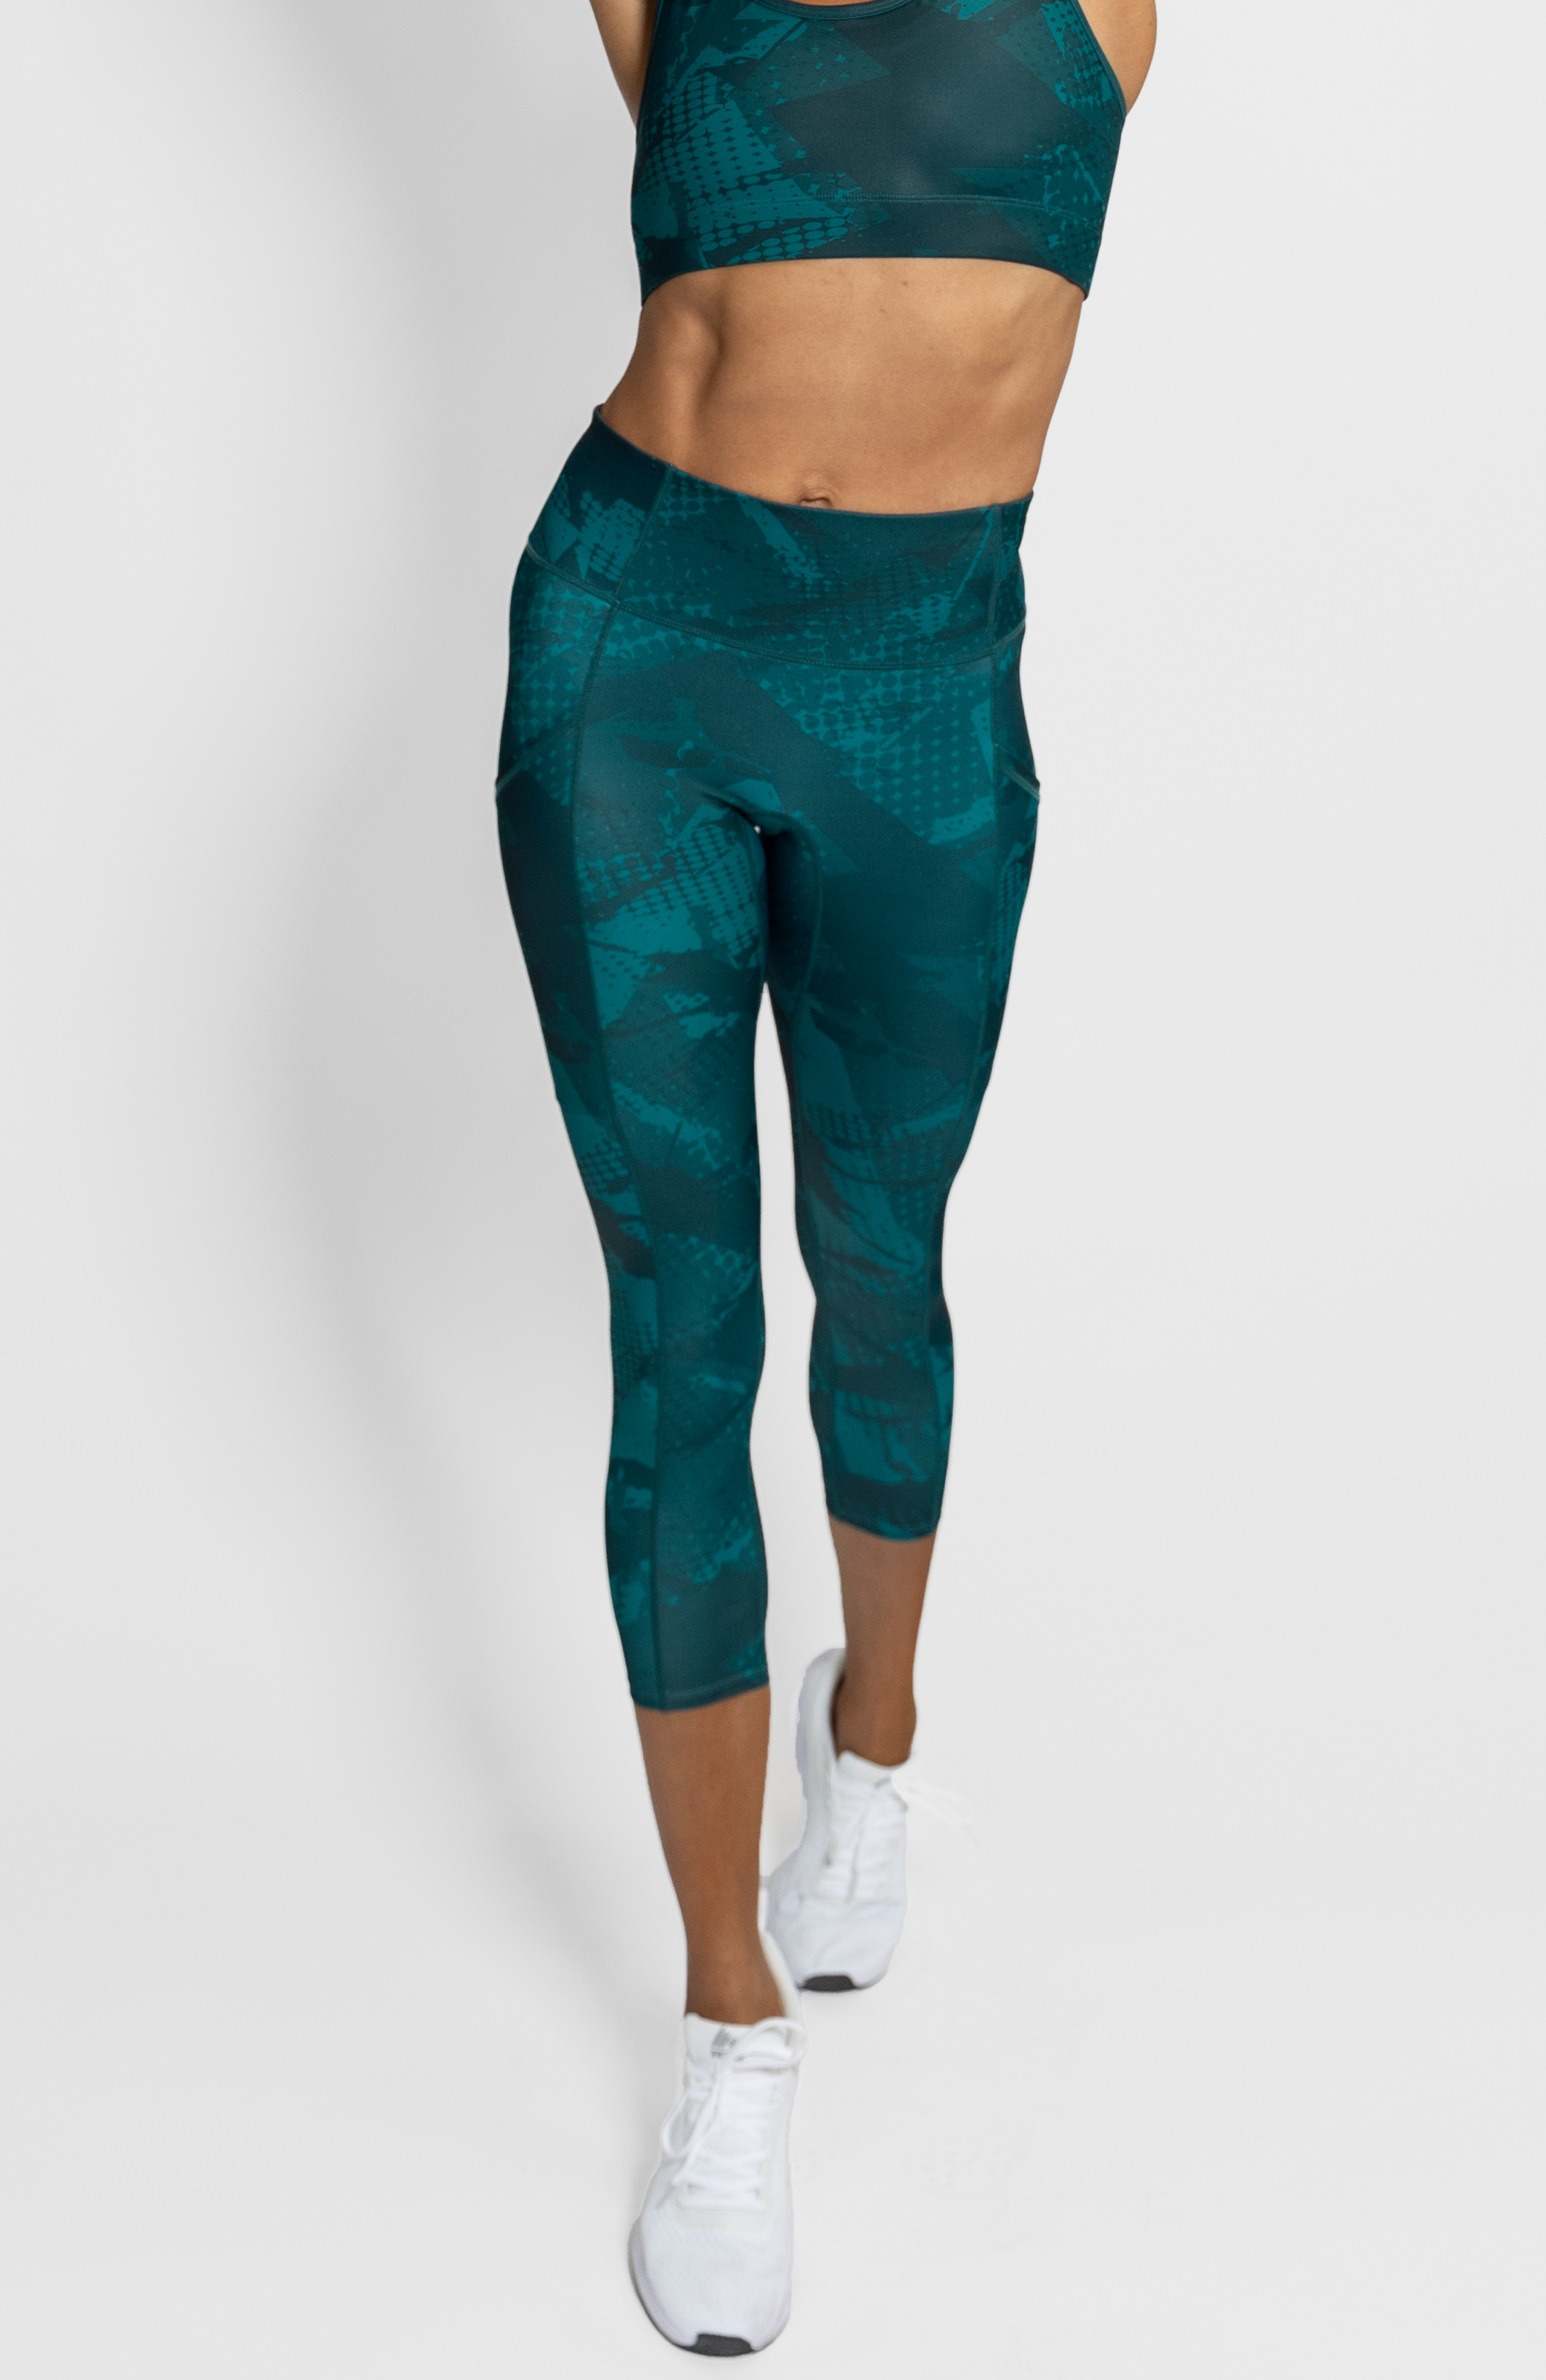  Women Yoga Pants Workout Running Leggings Outside Pockets  Jade Green XS